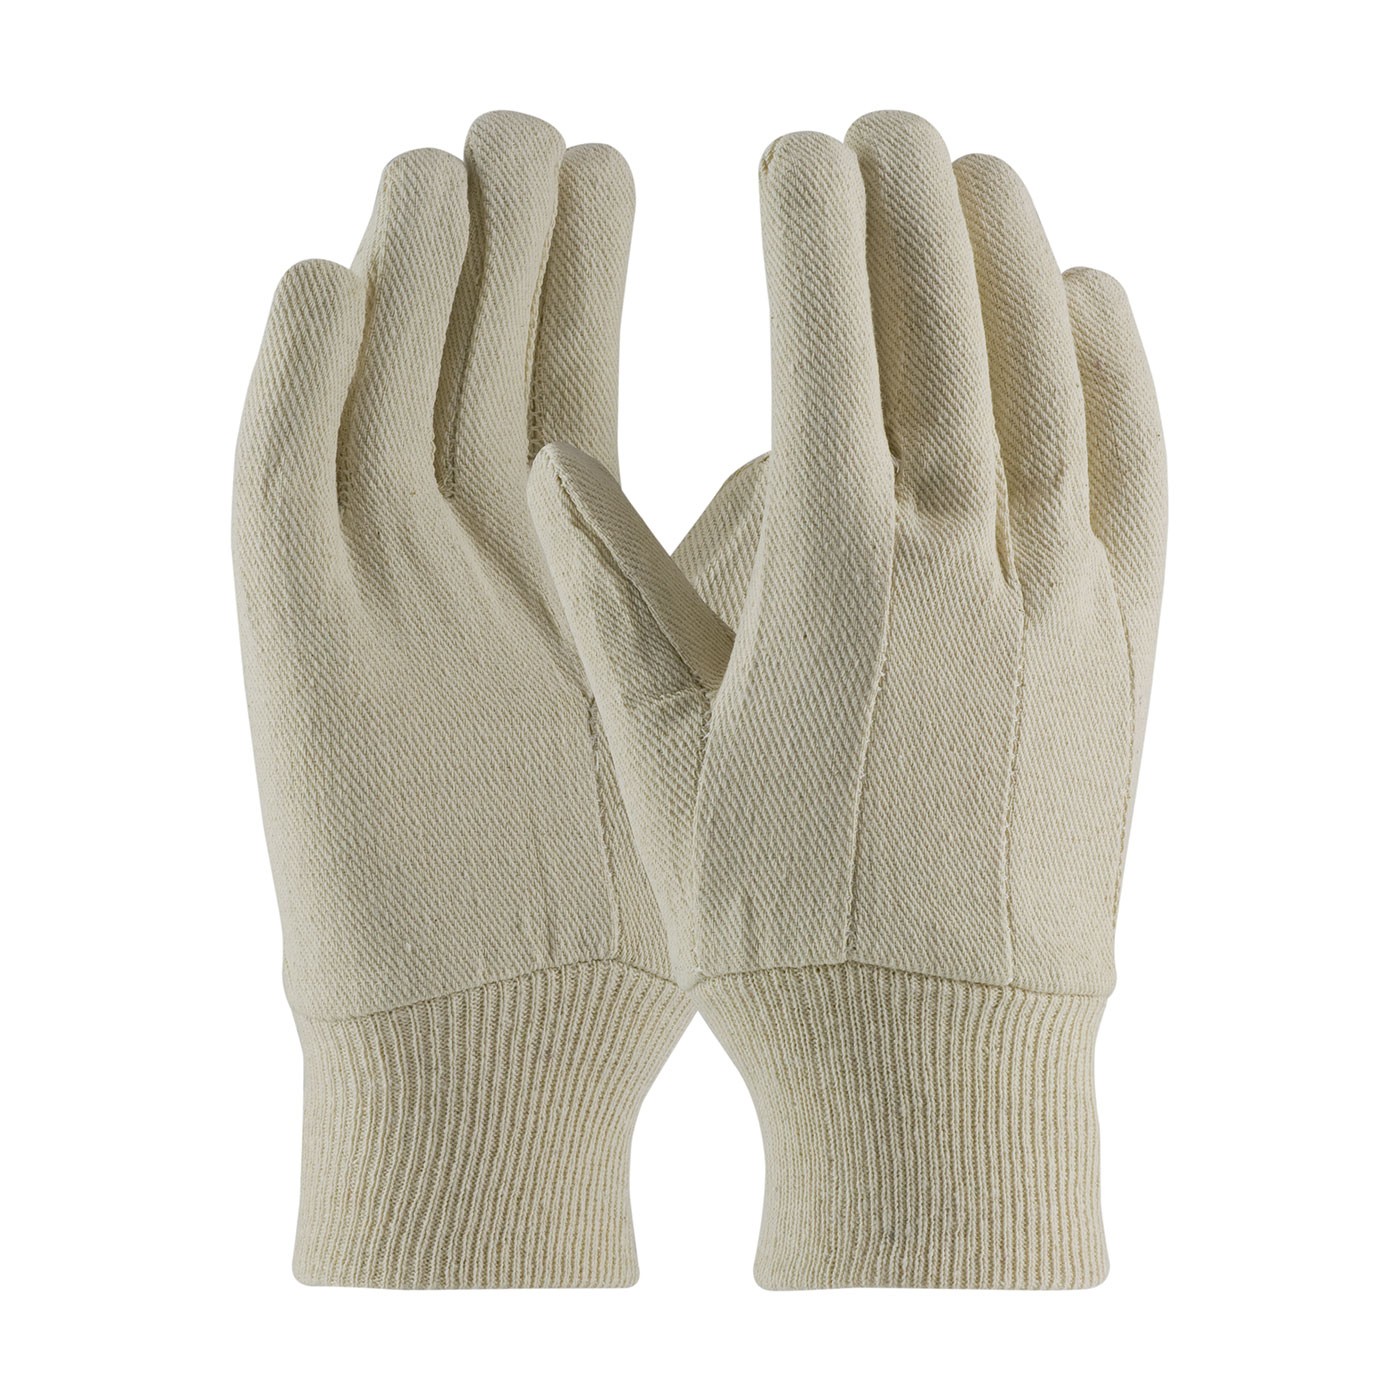 PIP® Economy Grade Cotton Canvas Single Palm Glove - Knitwrist  (#90-908CI)